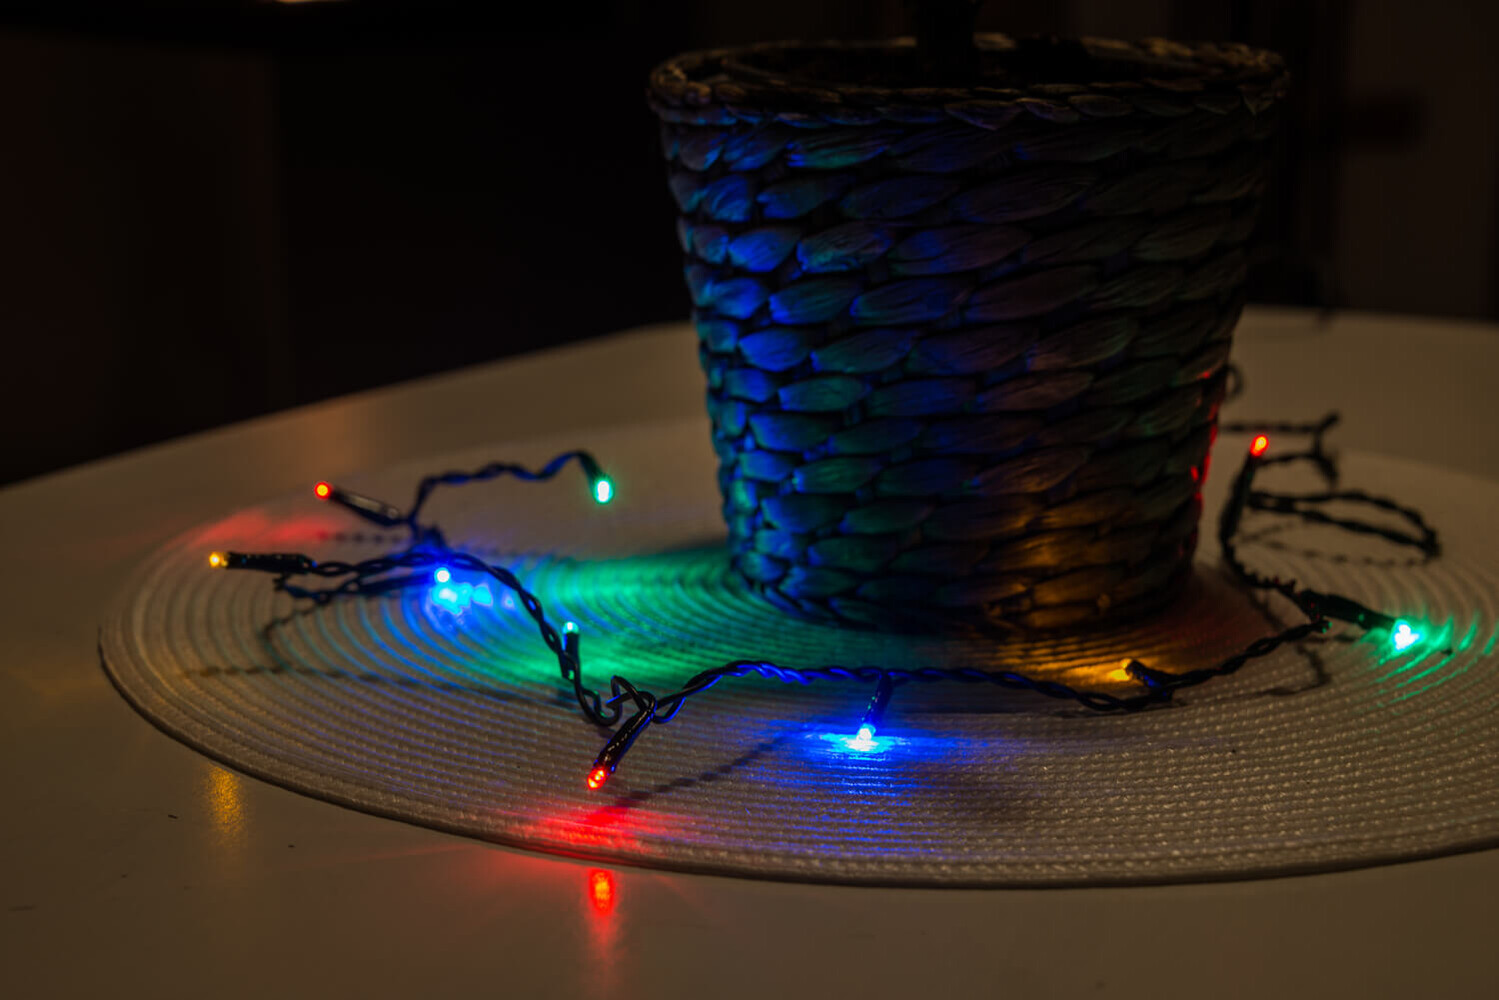 Buntes Konstsmide Lichterketten Produkt mit dunkelgrünem Kabel